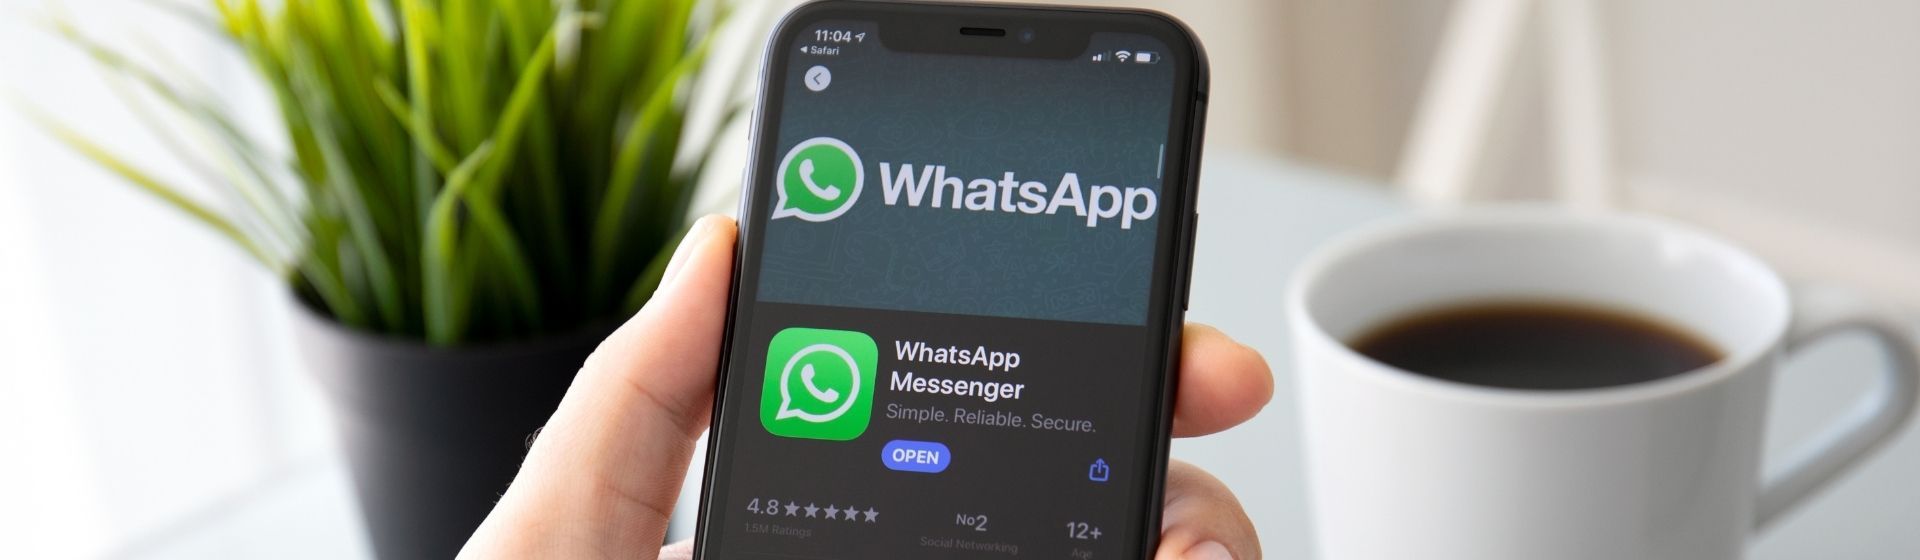 Modo escuro no WhatsApp: saiba como ativar no celular Android